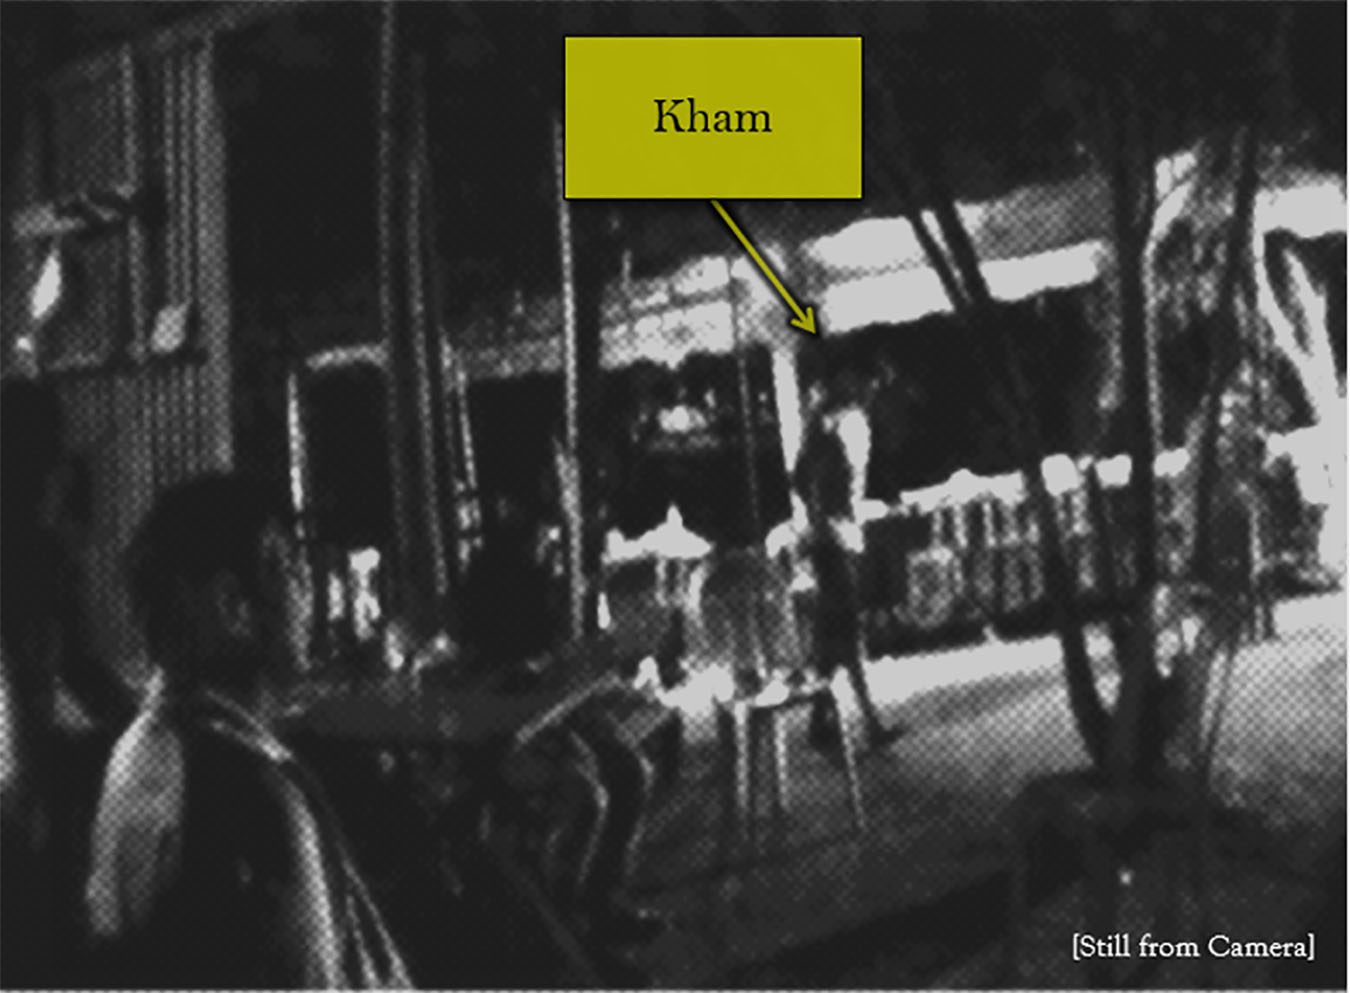 Kham entering the scene. Photo by Charles H. P. Zuckerman.